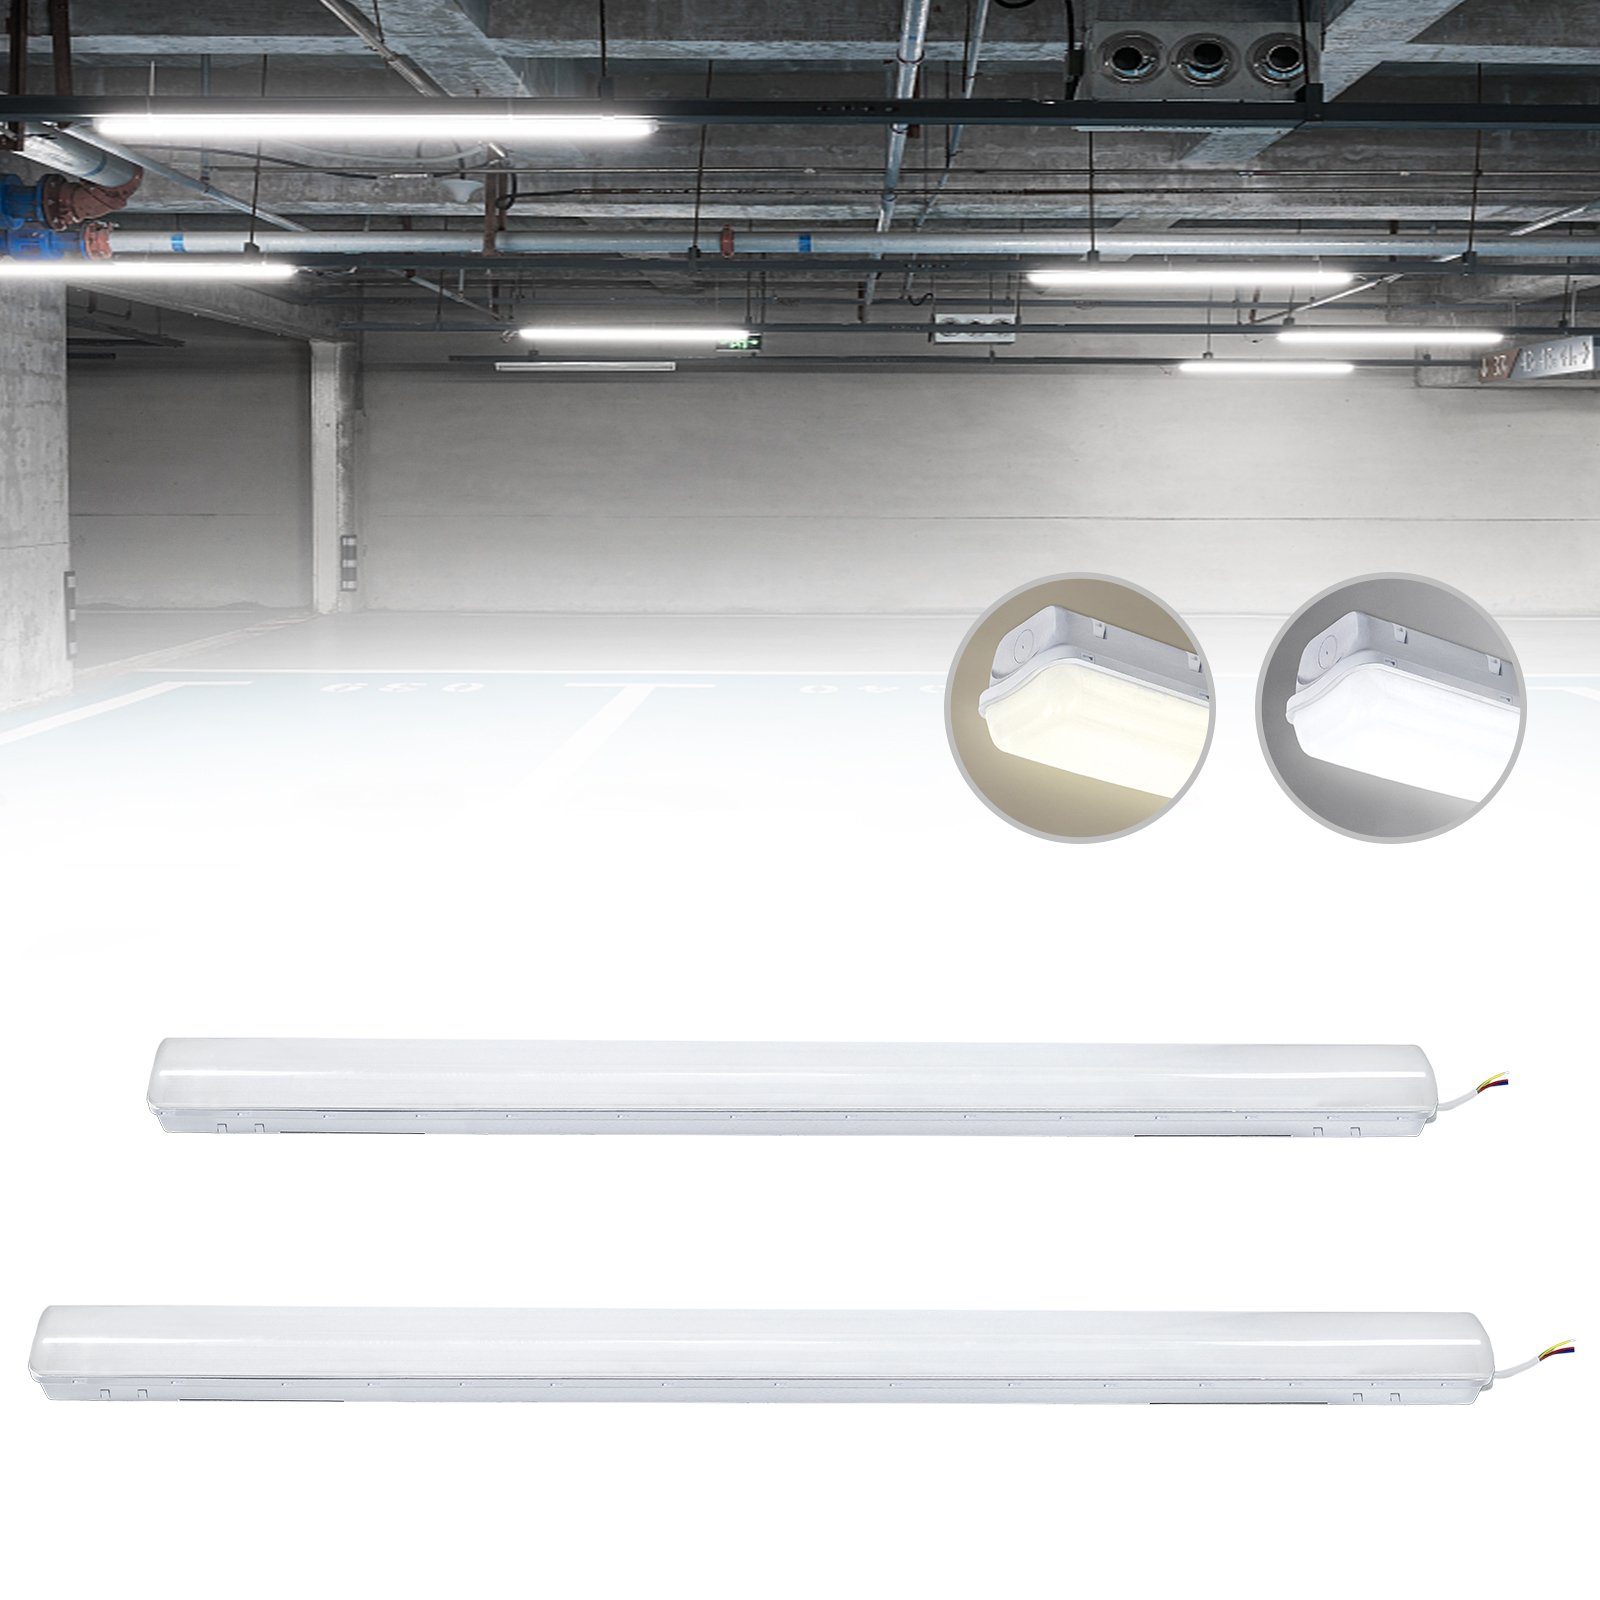 AUFUN LED Lichtleiste 2x Feuchtraumleuchte aus Polycarbonat, 36W/48W, 36W